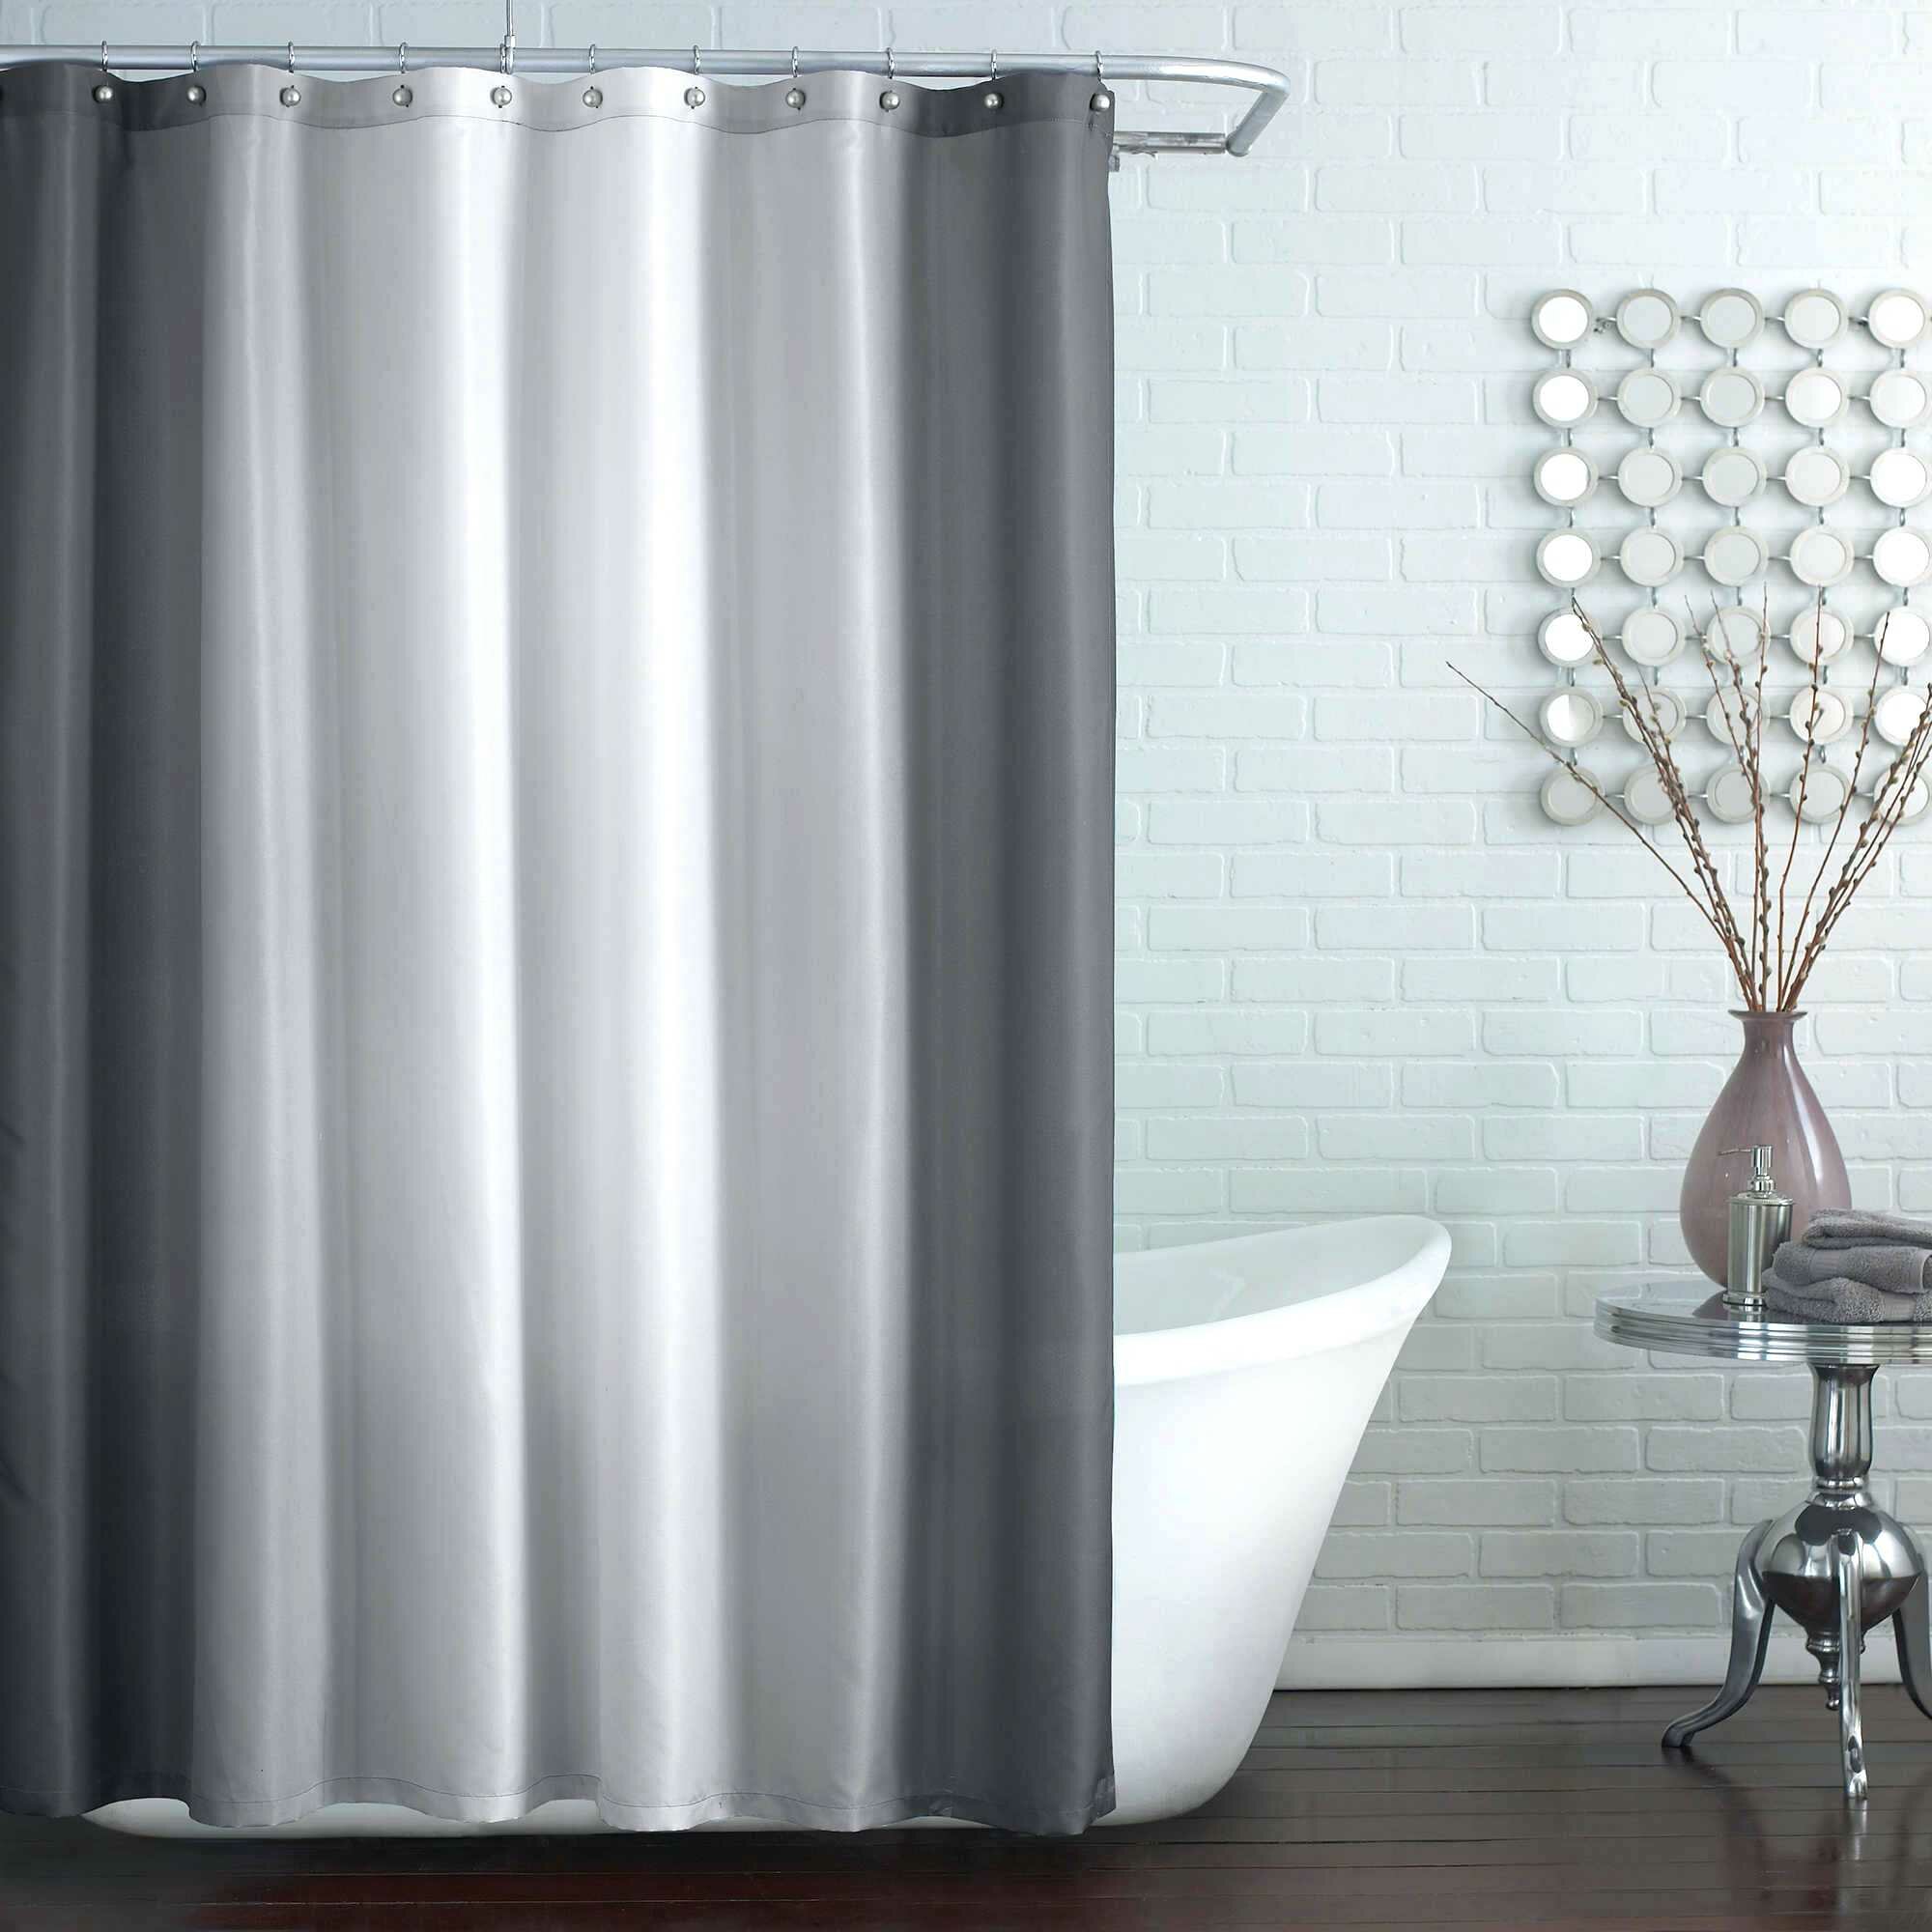 Shower Curtain Holder | Tvingen Shower Curtain | Ikea Shower Curtain